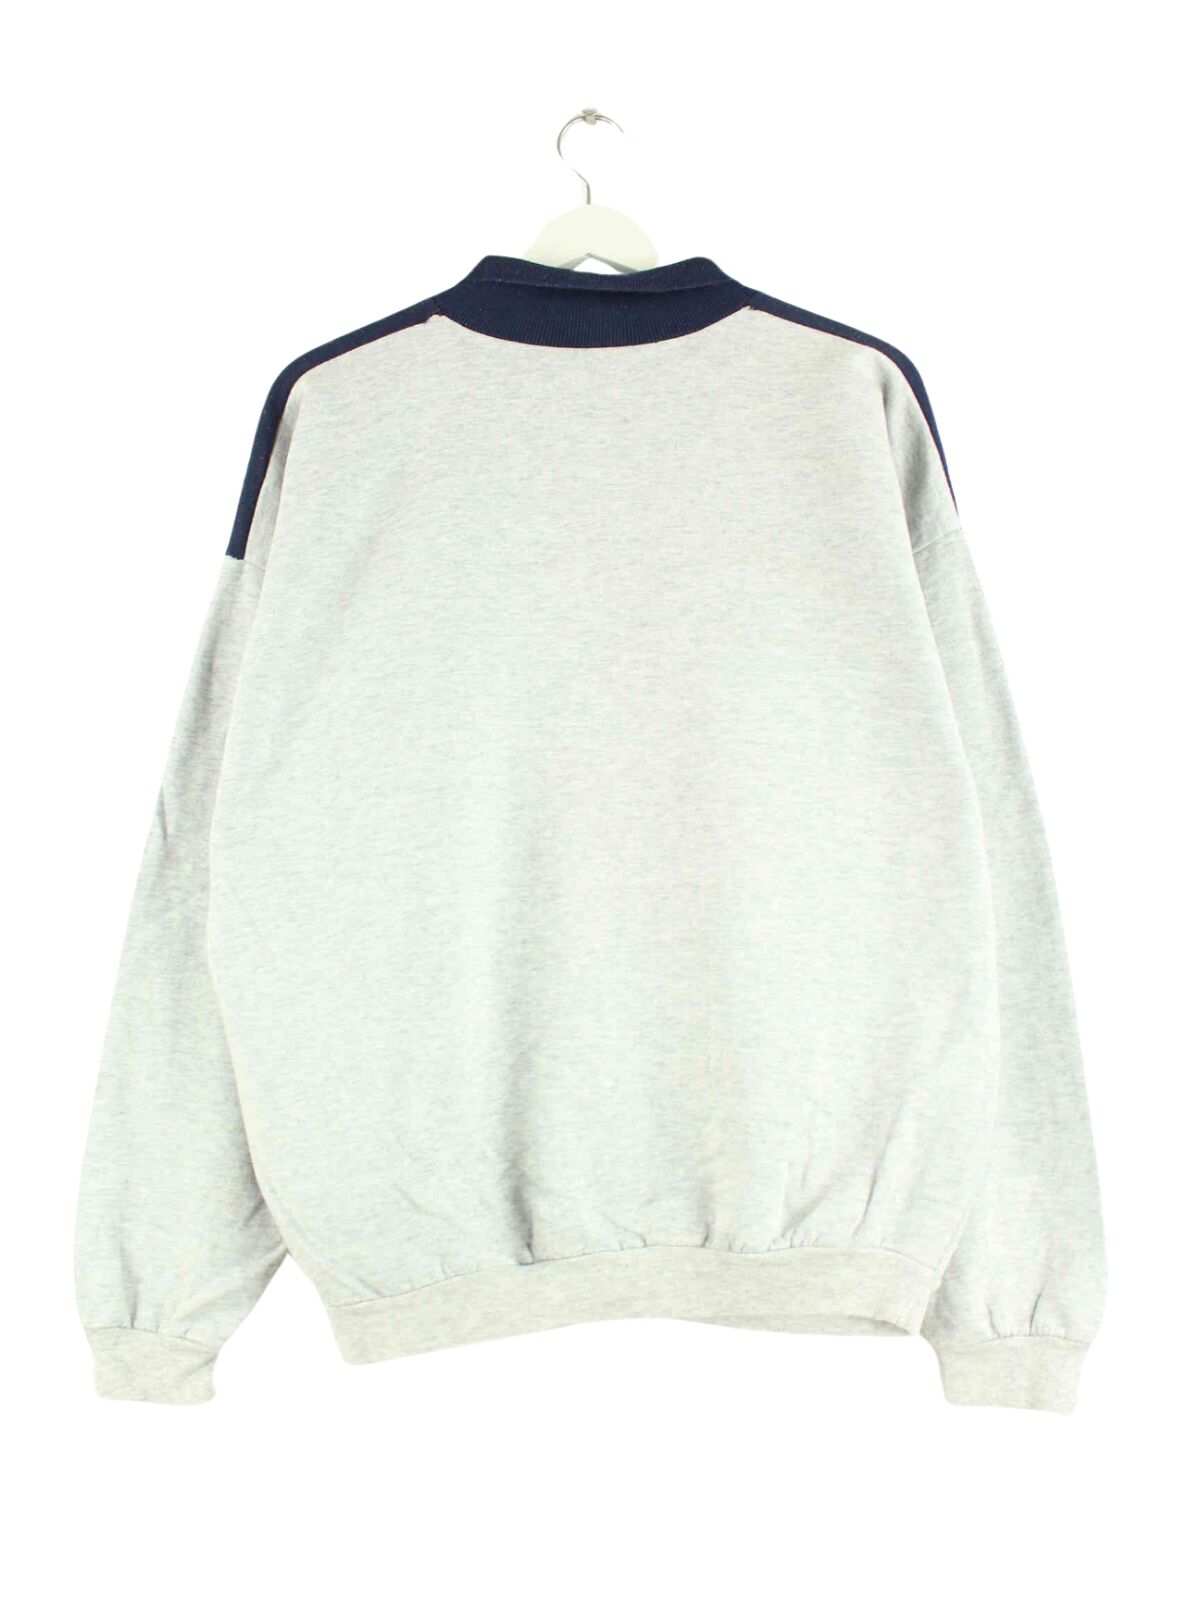 Nike 80s Vintage Polo Sweater Grau L (back image)